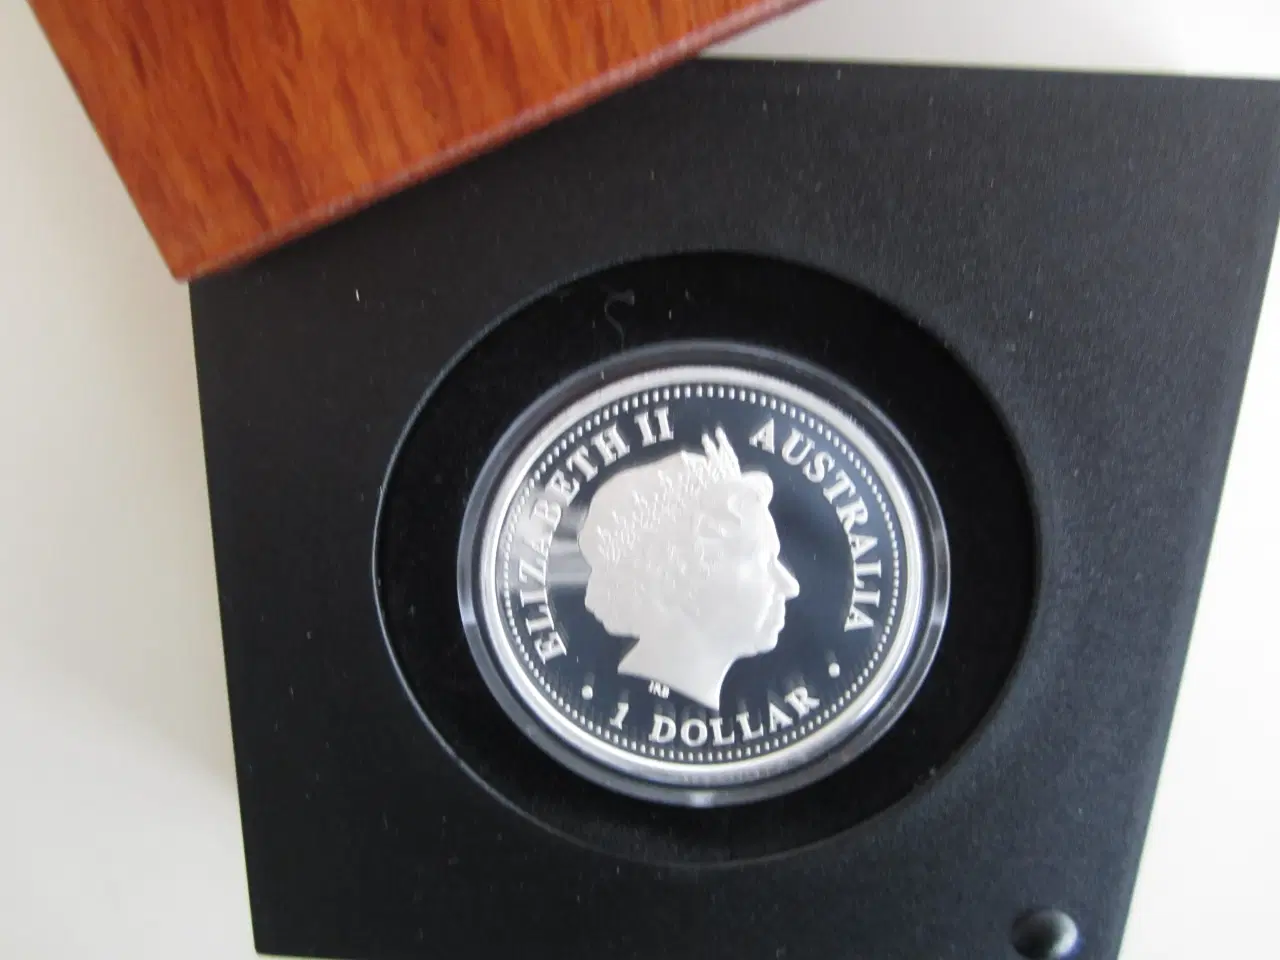 Billede 7 - Discover Australia "Sydney" 2007 sølvmønt.